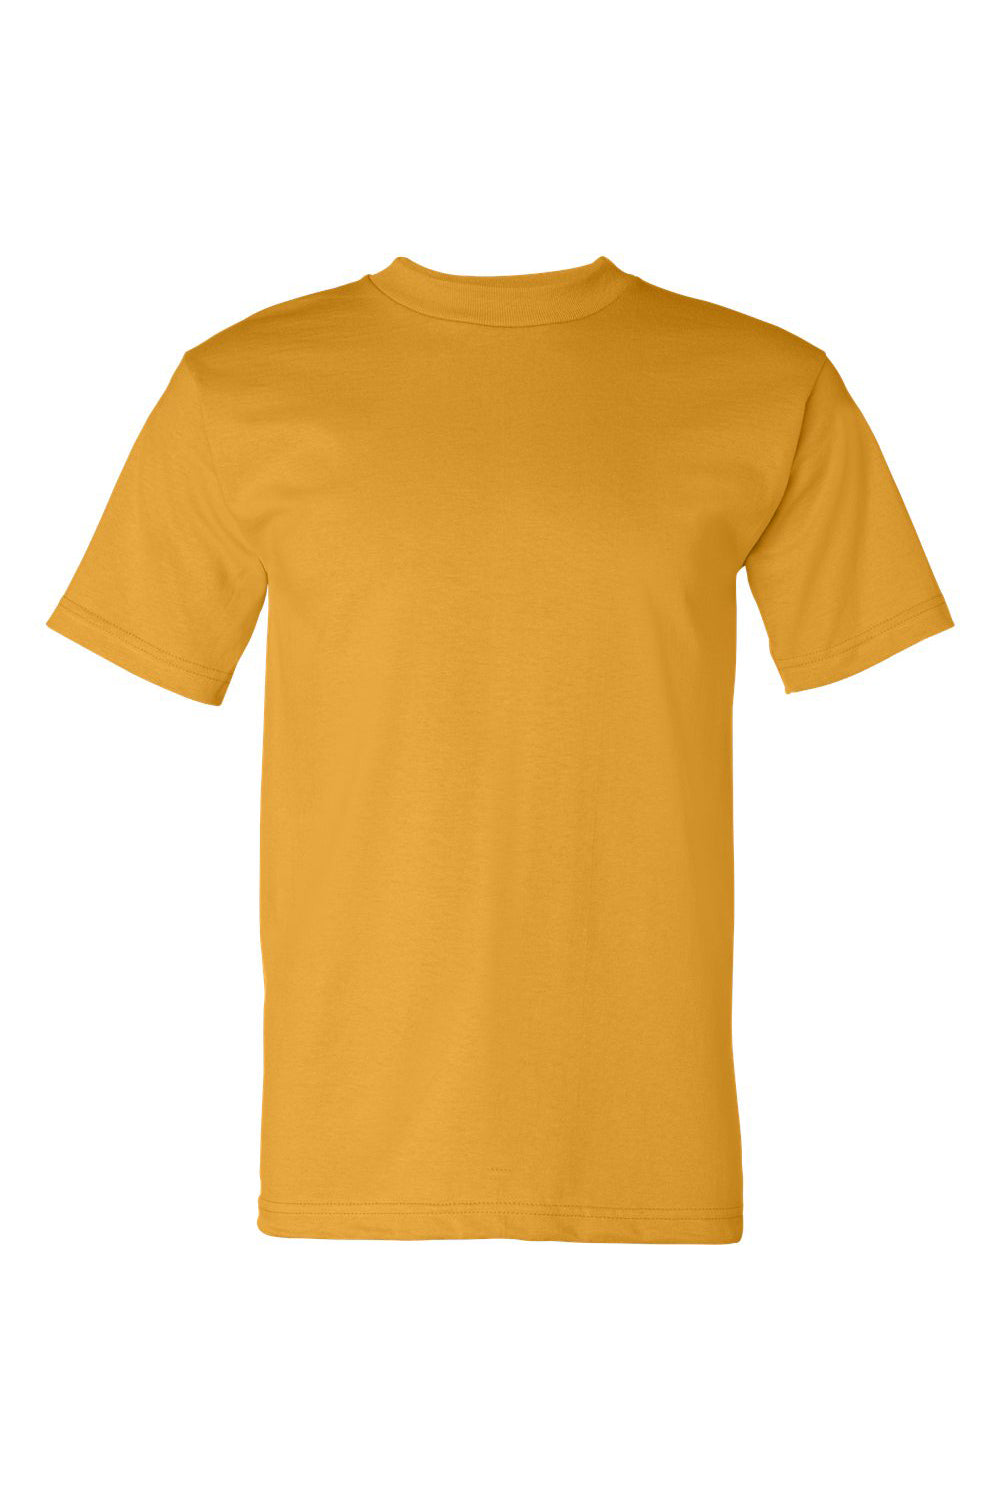 Bayside BA5100 Mens USA Made Short Sleeve Crewneck T-Shirt Gold Flat Front